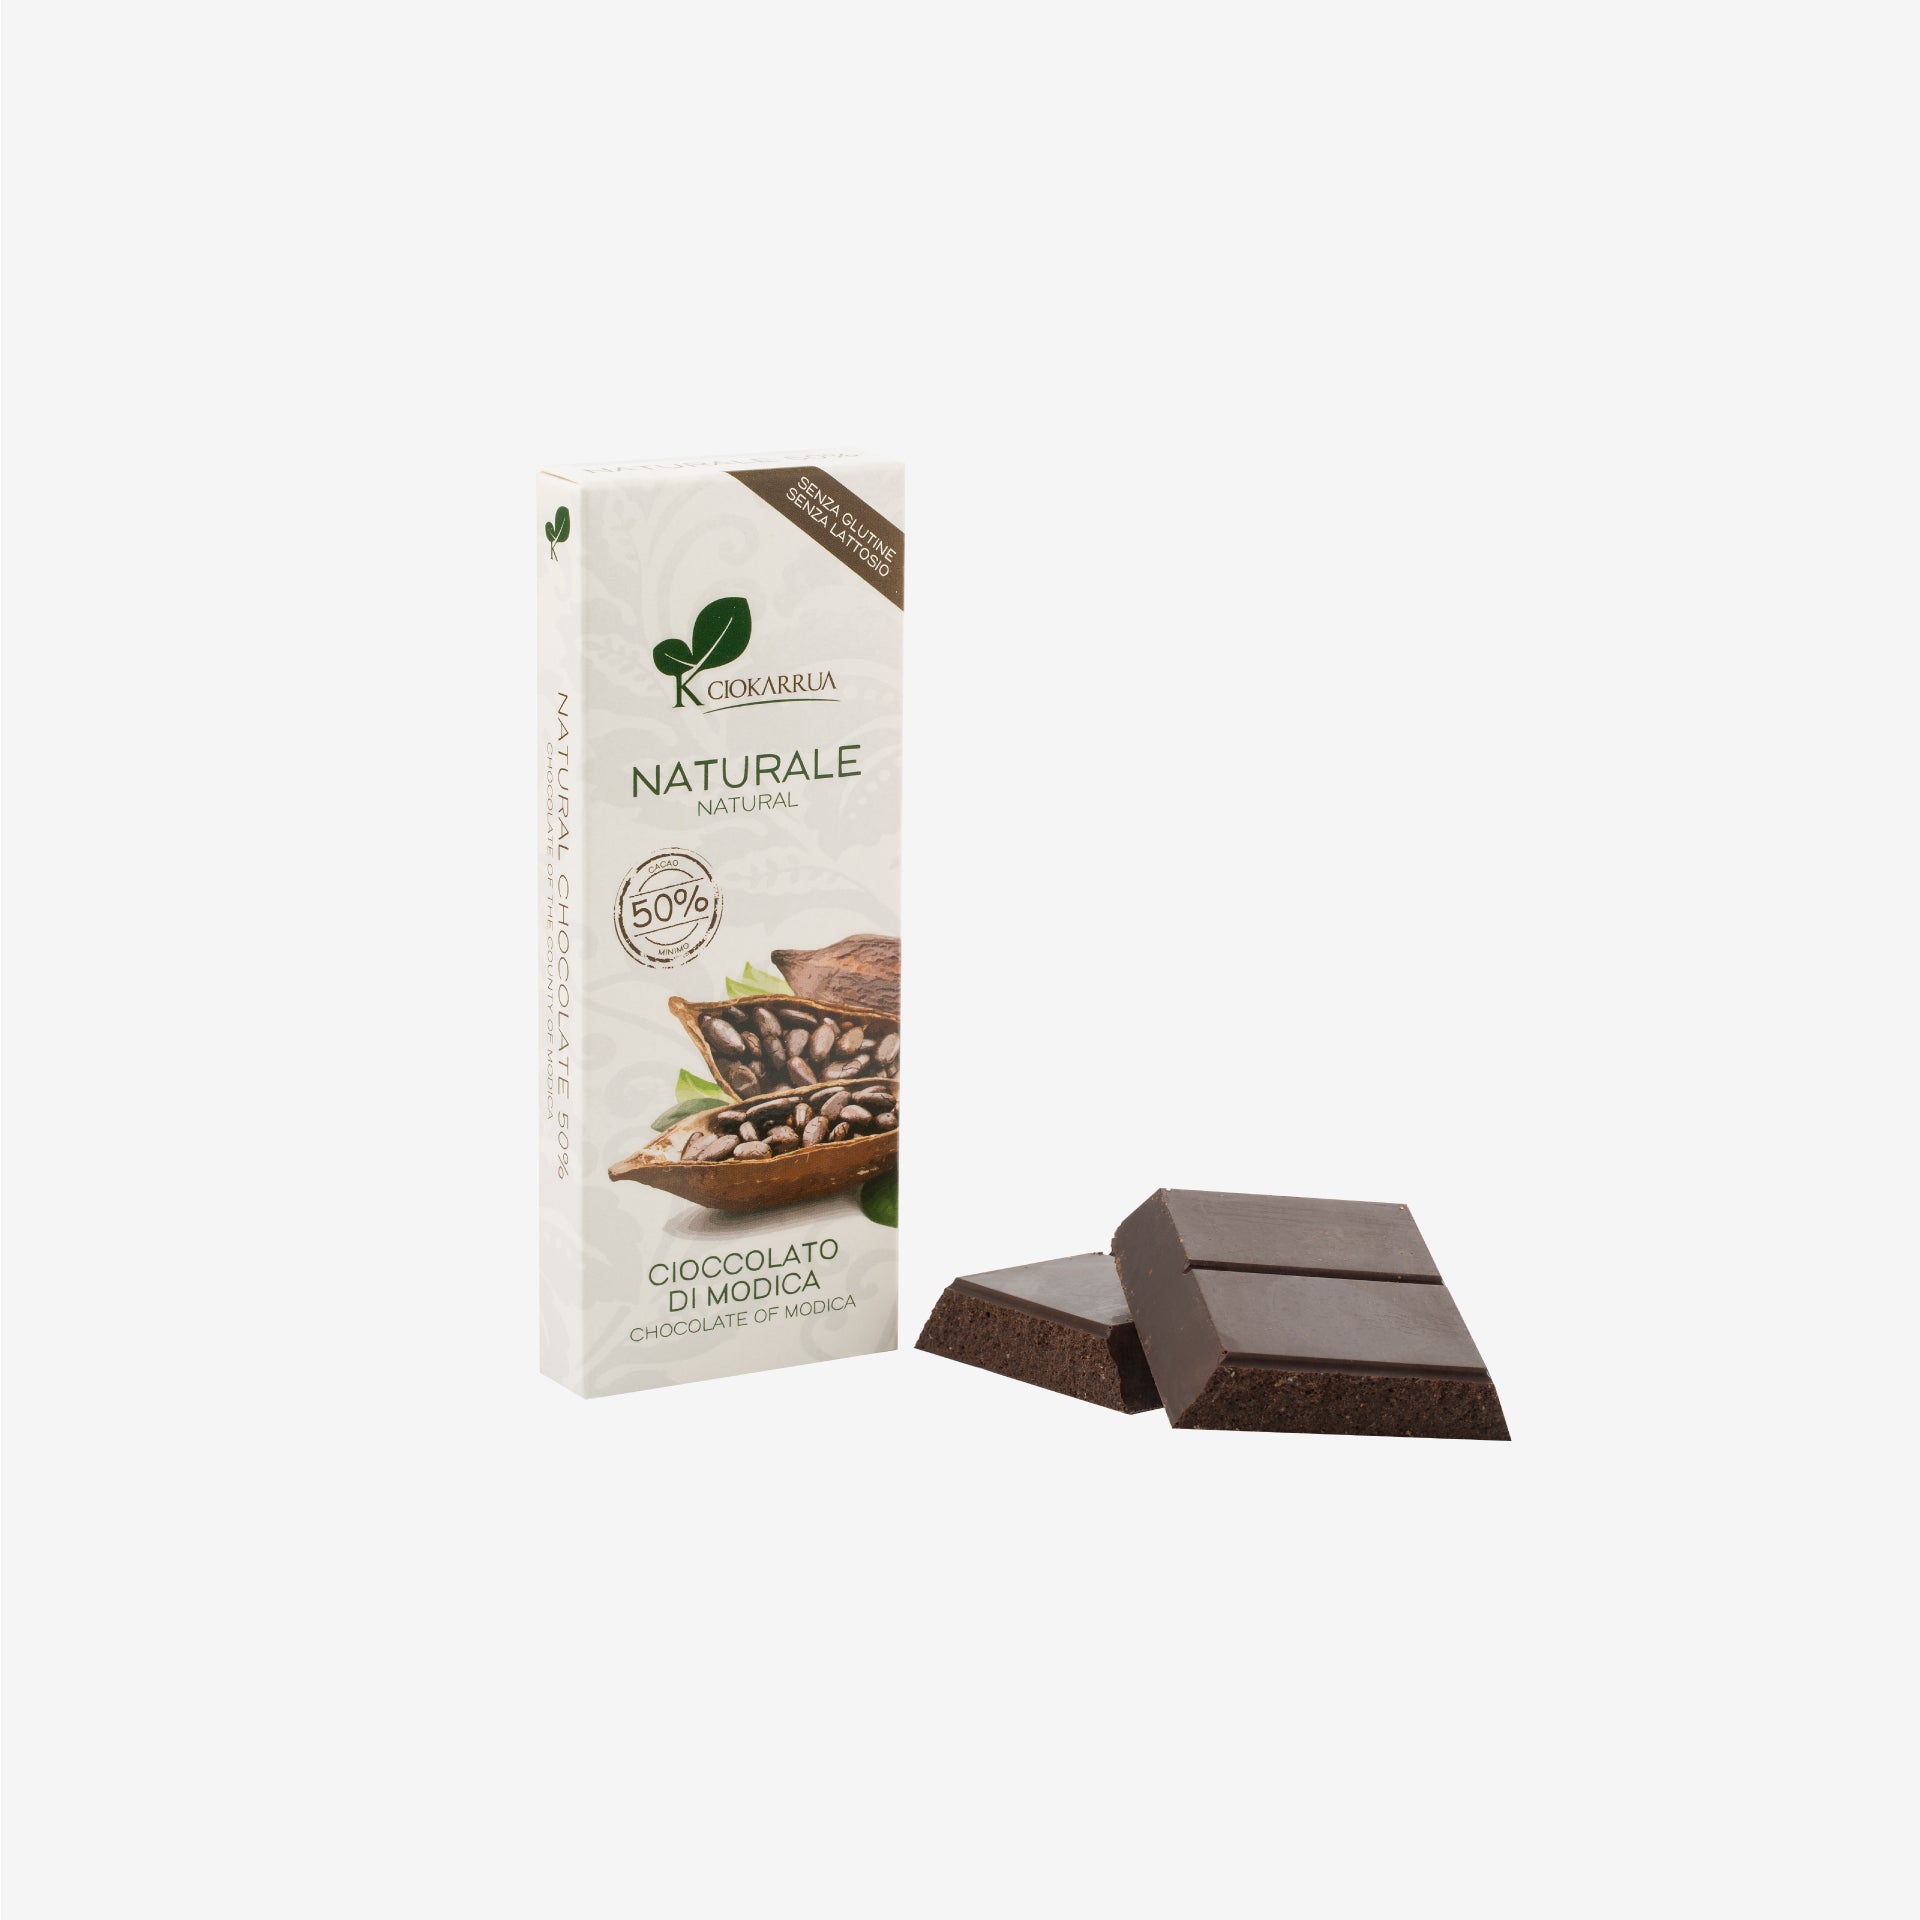 50% natural Modica chocolate